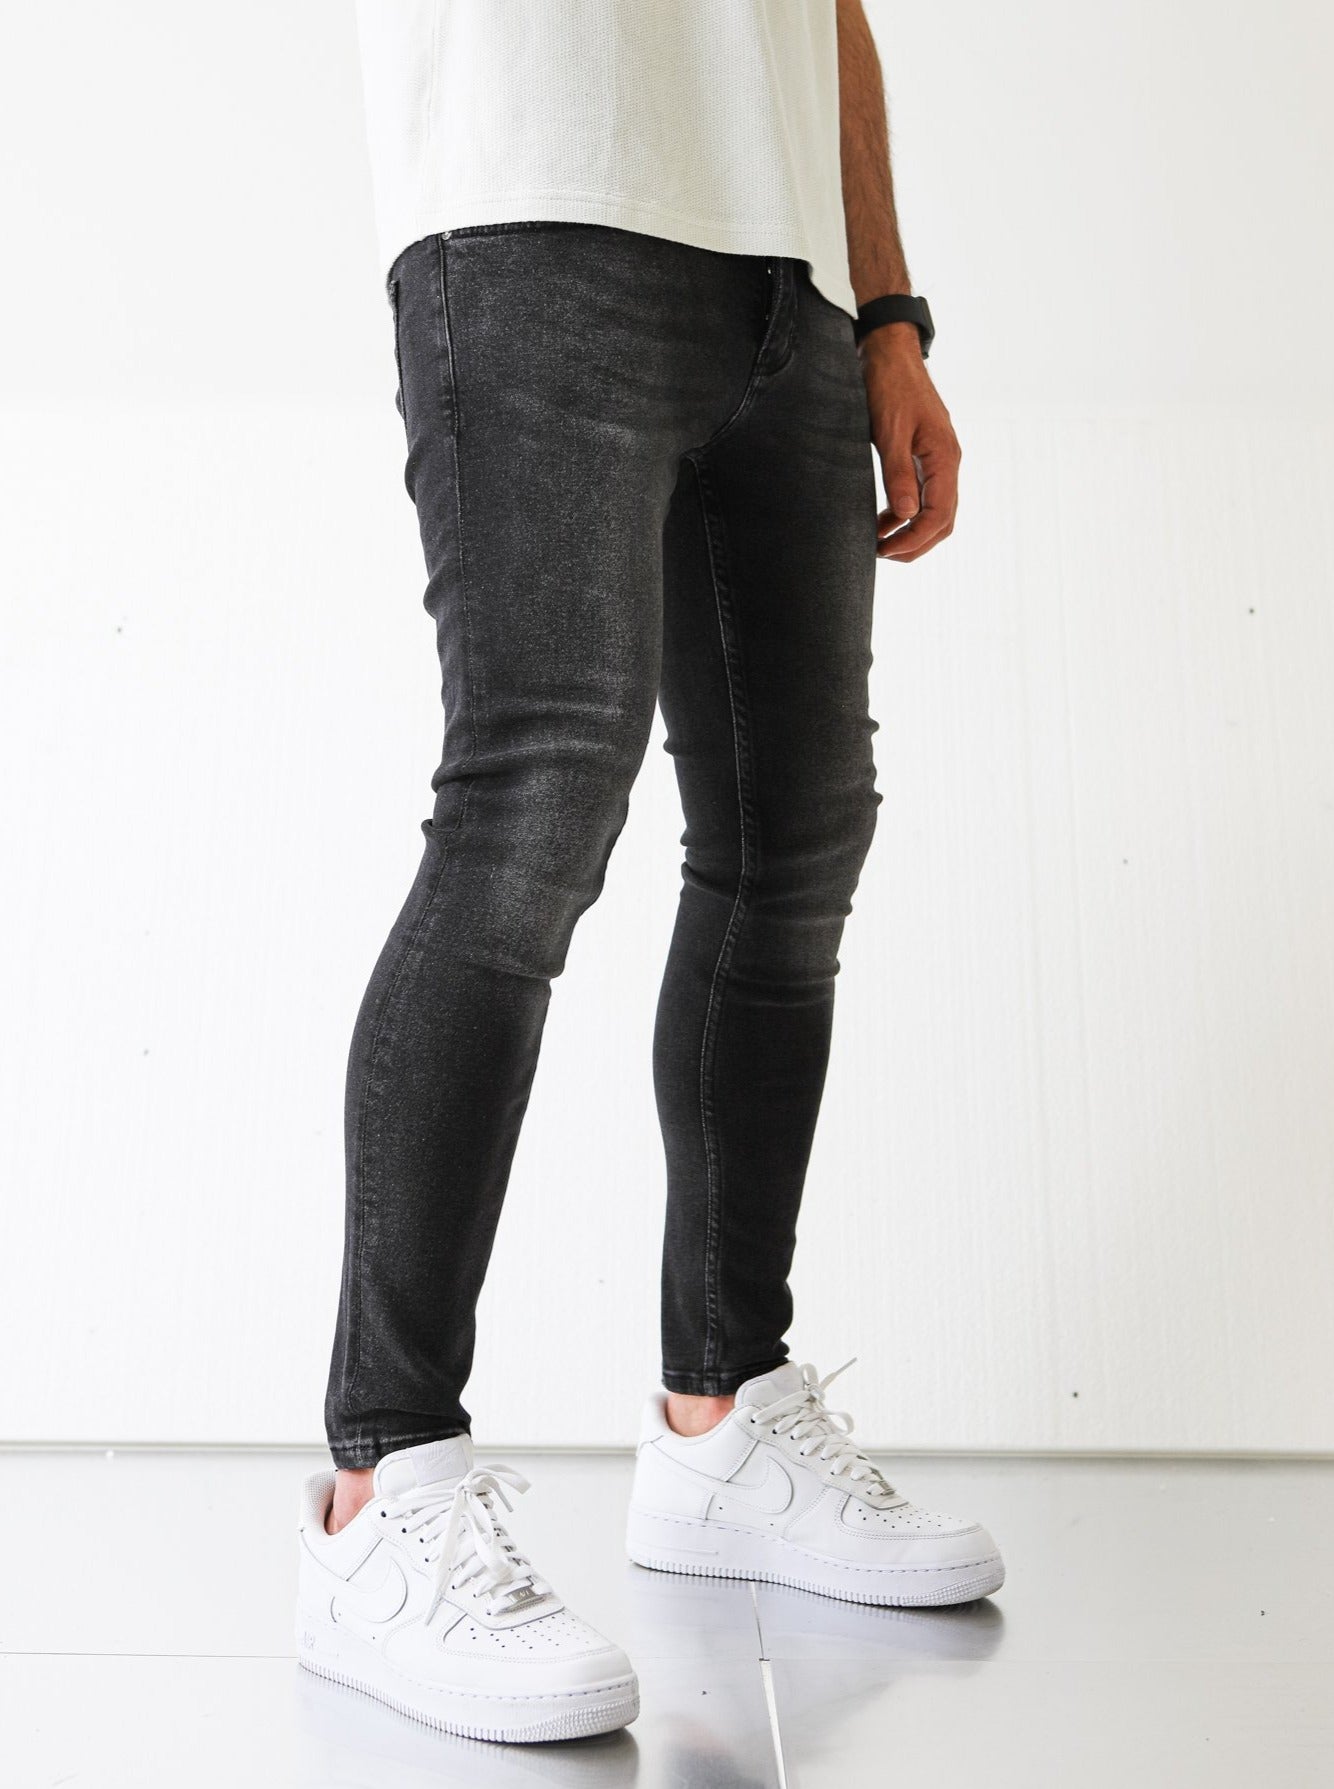 Premium Basic Black Skinny Jeans - UNEFFECTED STUDIOS® - JEANS - UNEFFECTED